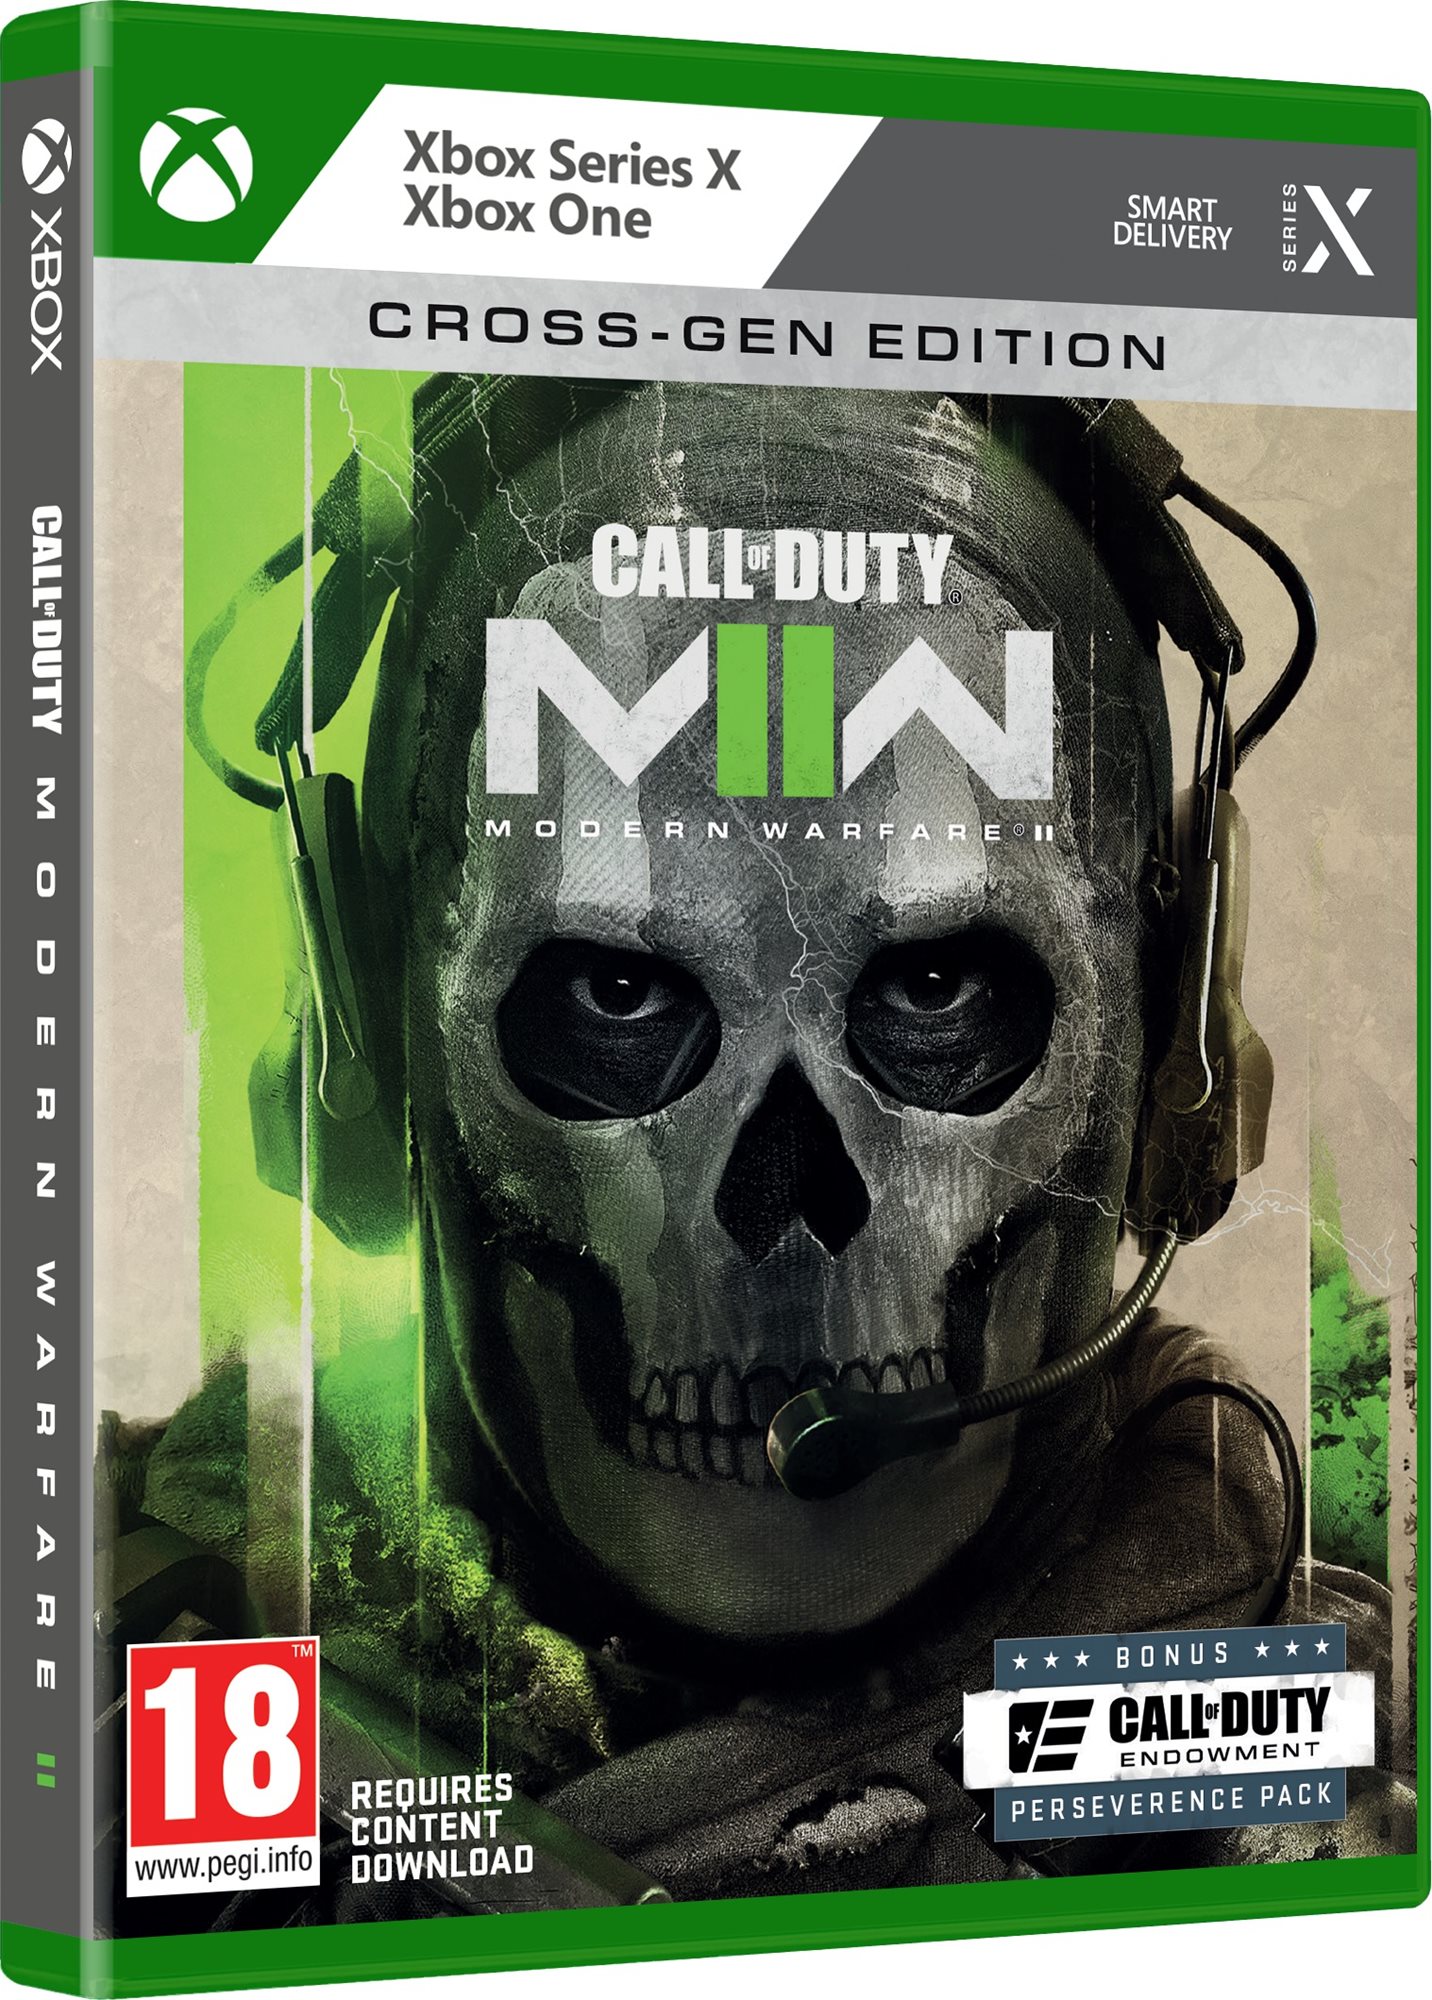 Call of Duty: Modern Warfare II C.O.D.E. Edition - Xbox